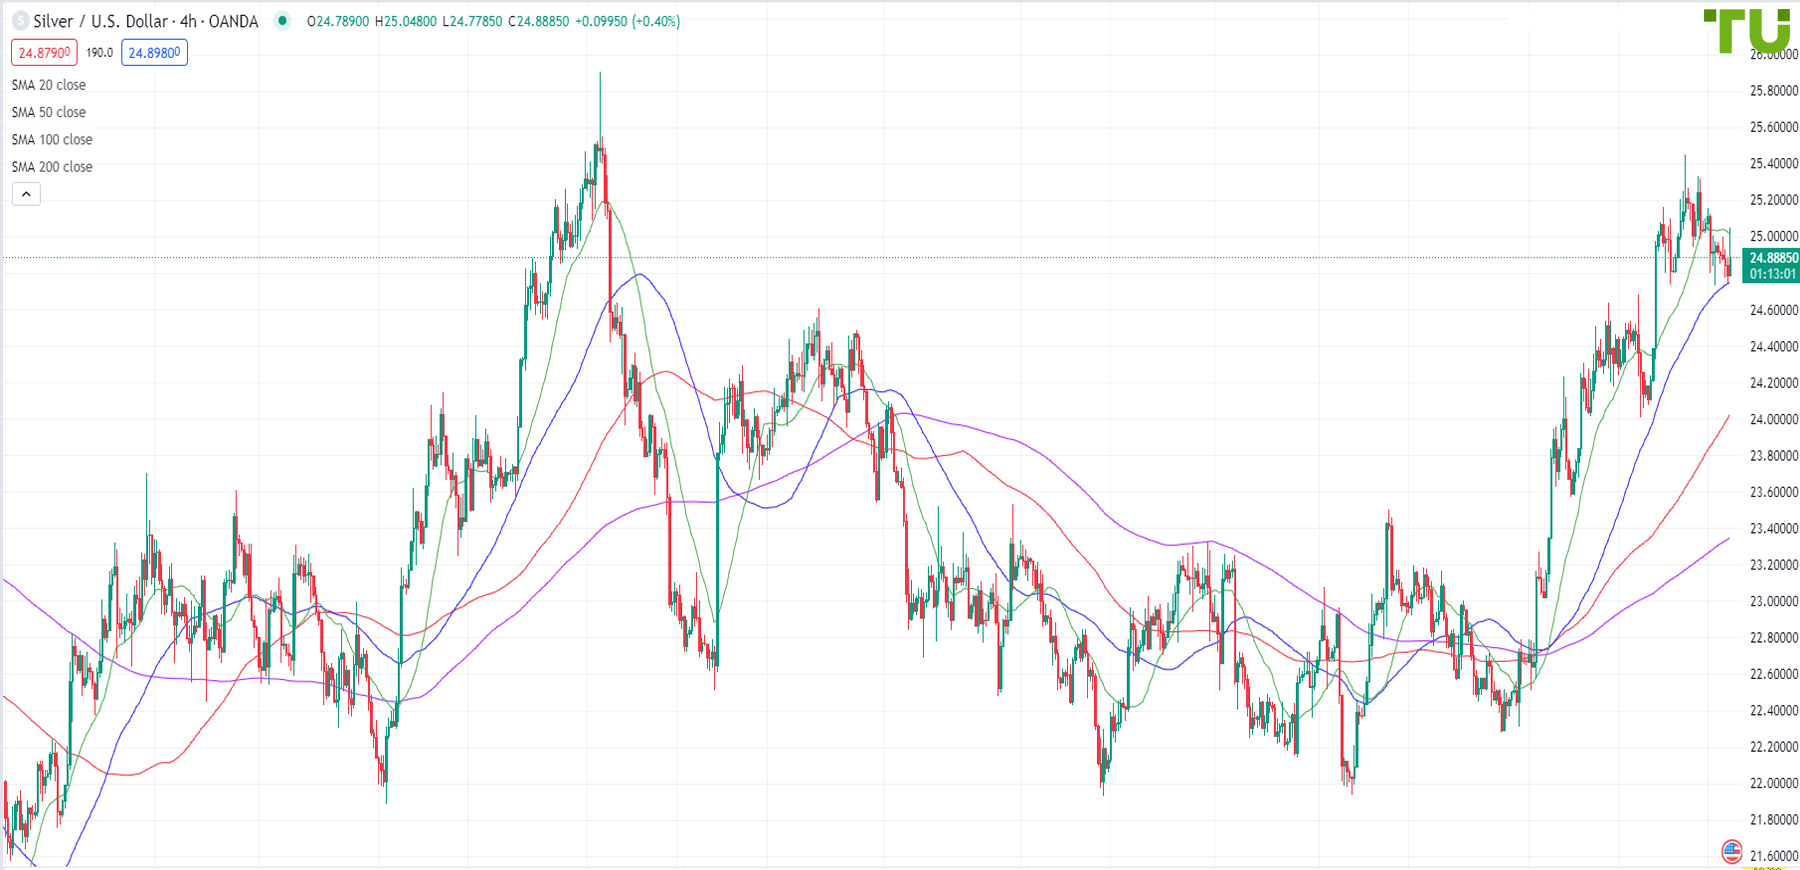 XAG/USD is trading flat